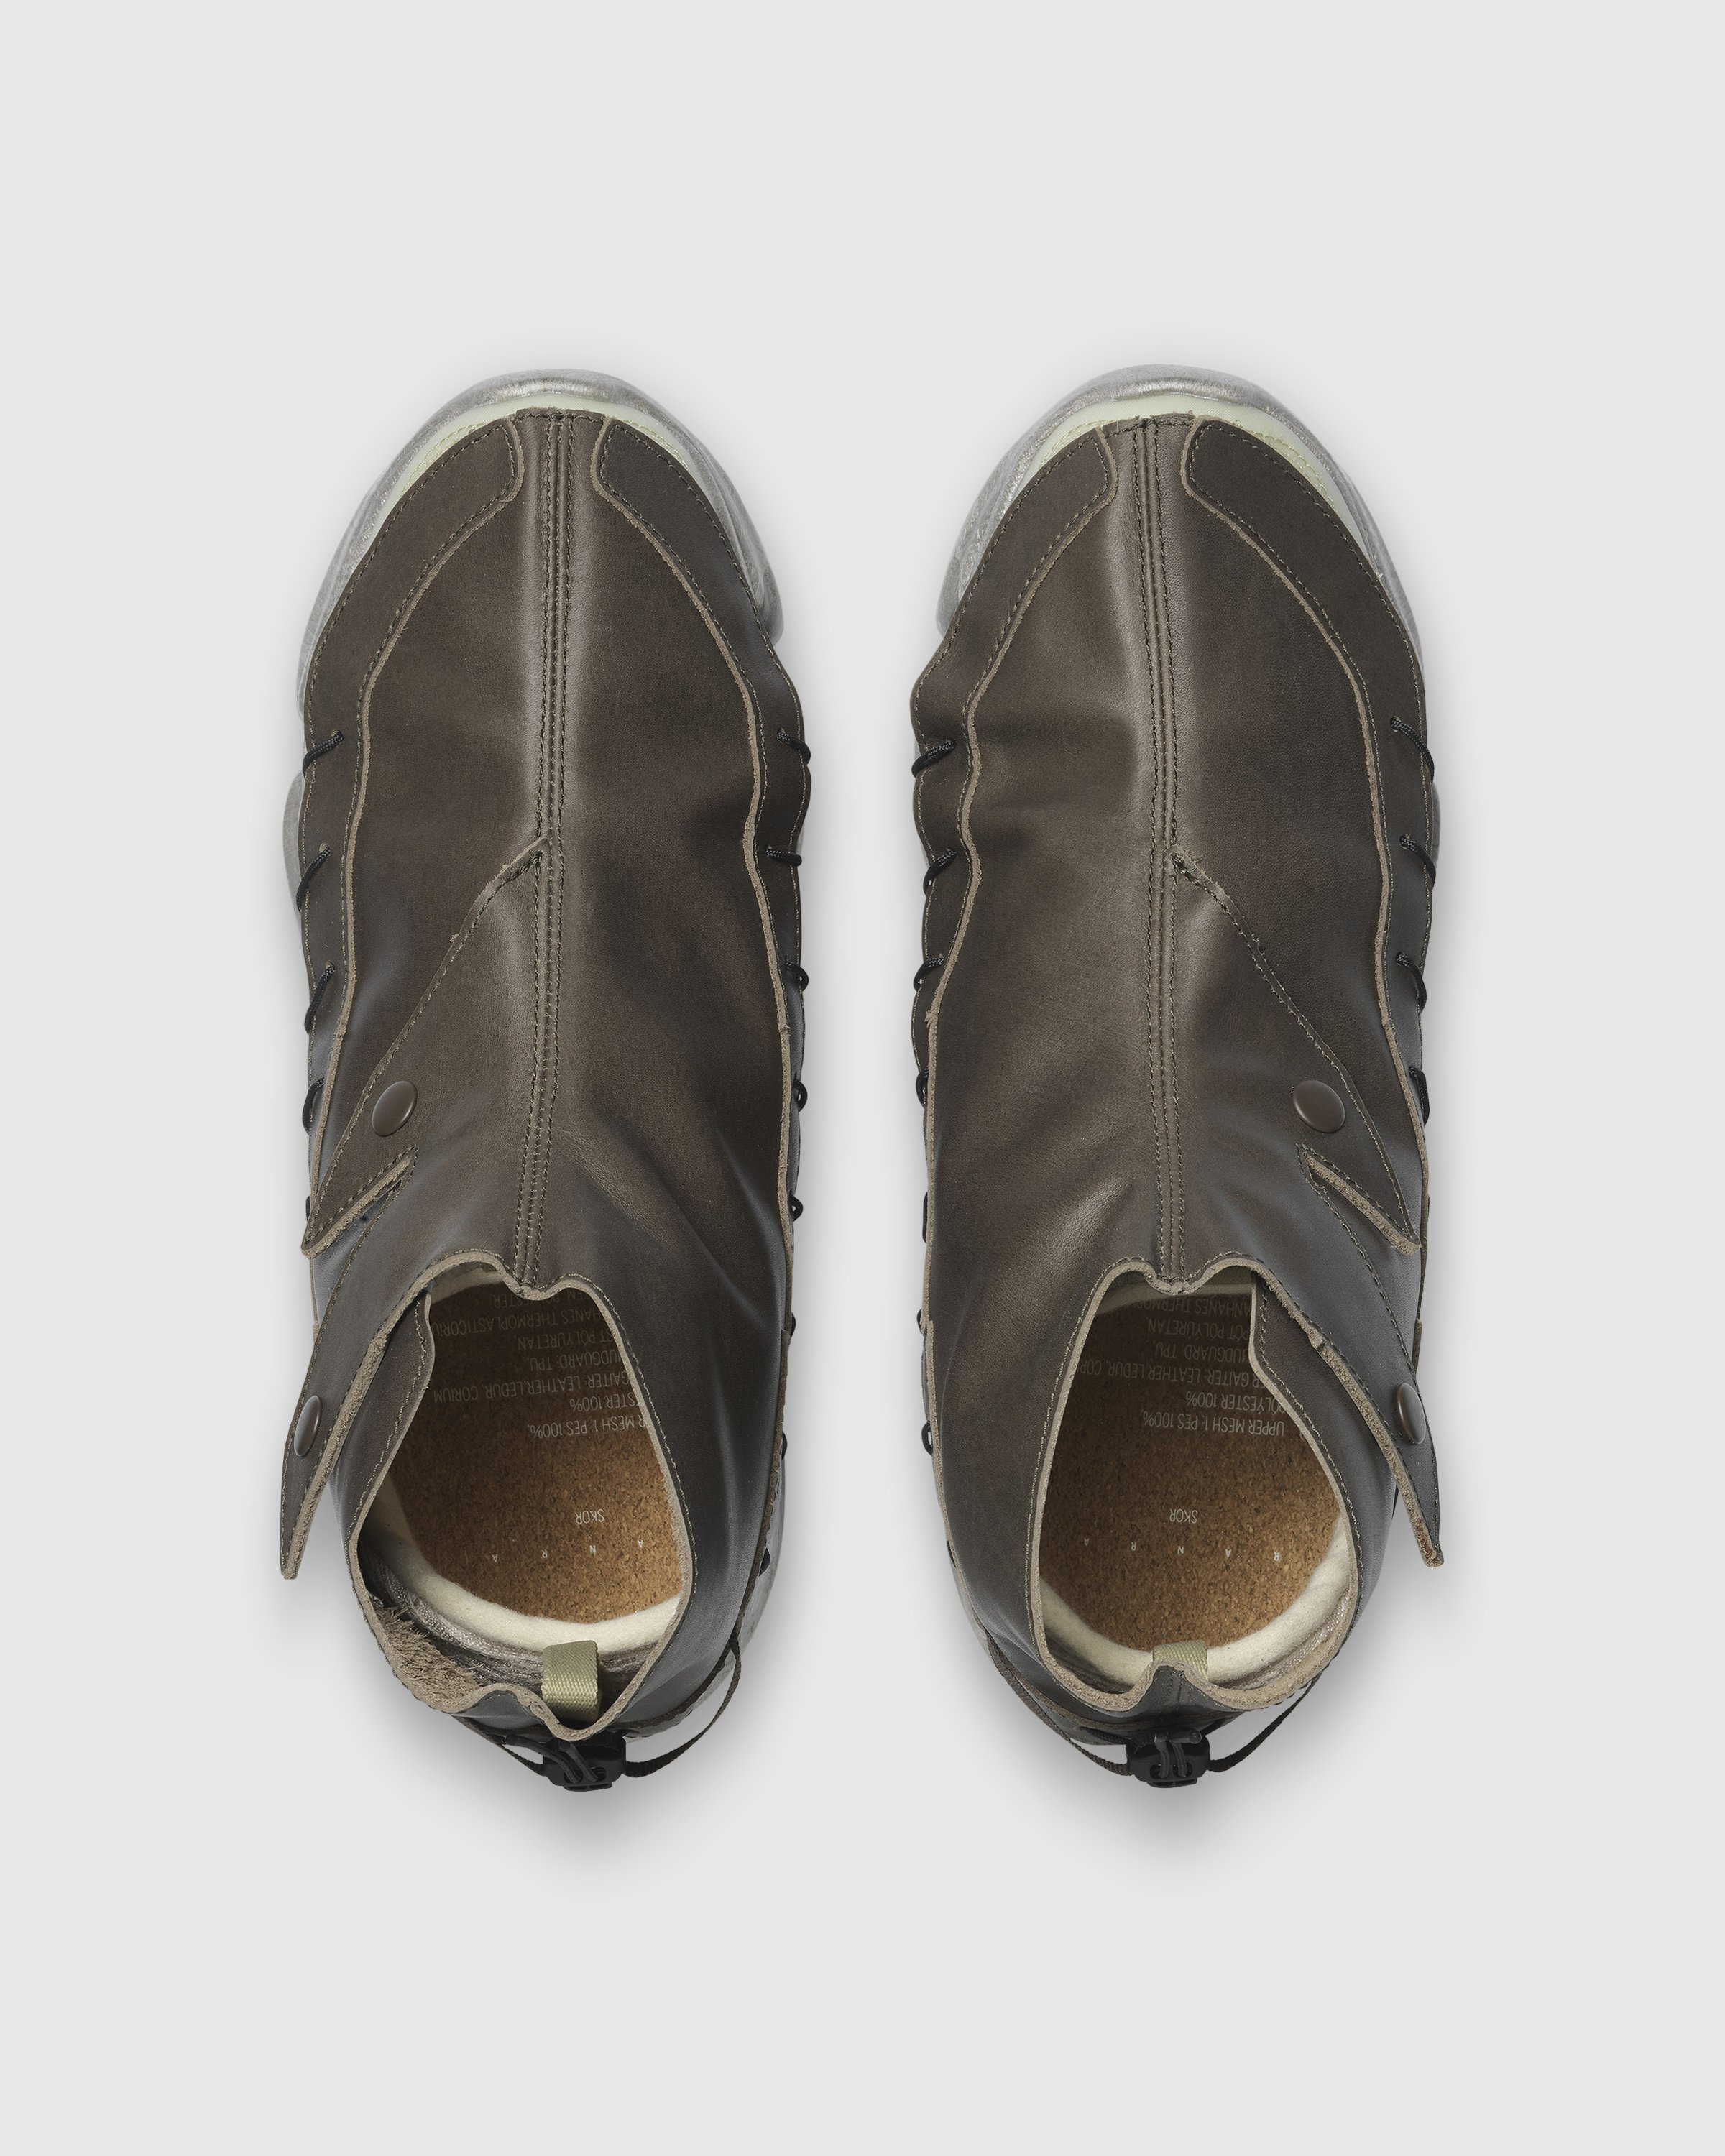 RANRA x Salomon - SKOR RANRA Bleached Sand/Alfalfa/Slate Green - Footwear - Multi - Image 6